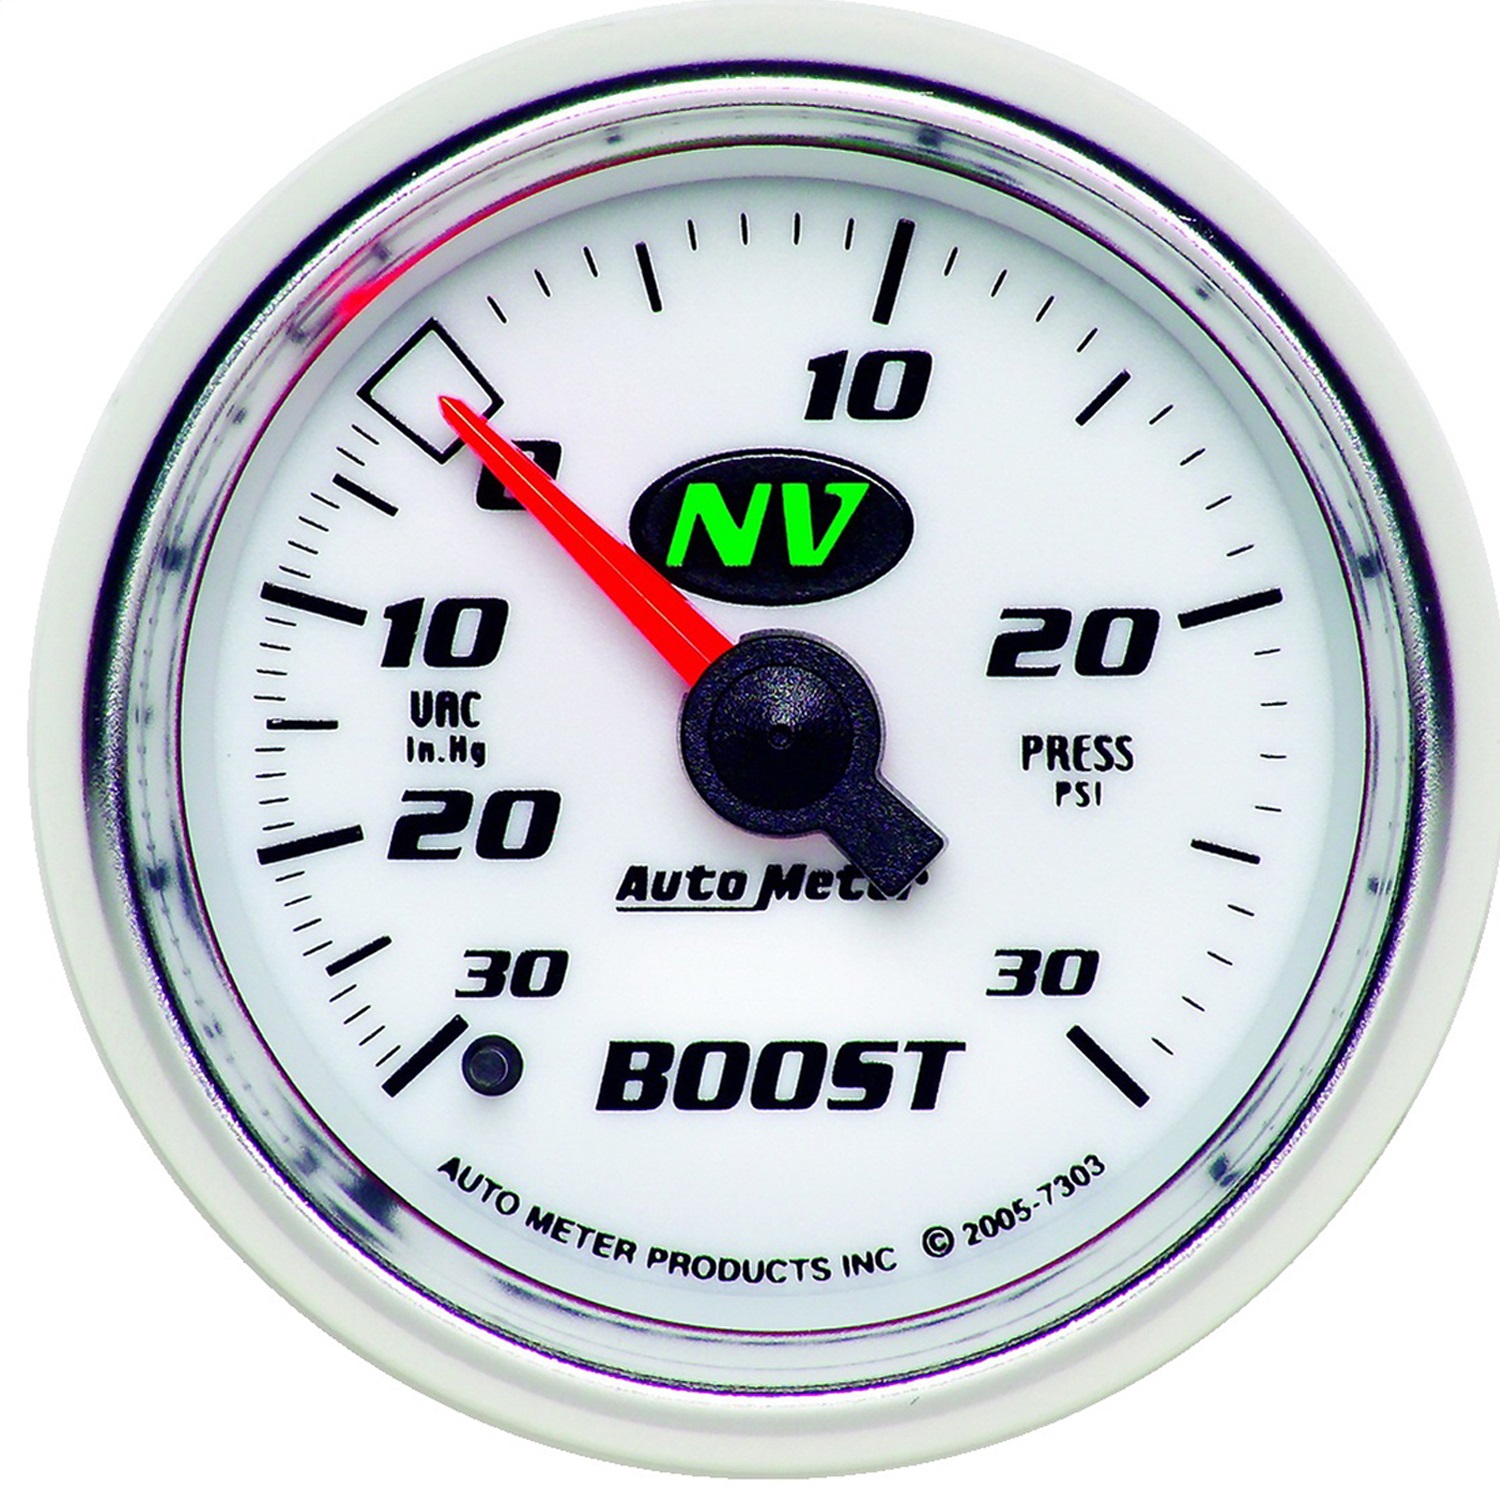 Auto Meter Auto Meter 7303 NV; Mechanical Boost/Vacuum Gauge